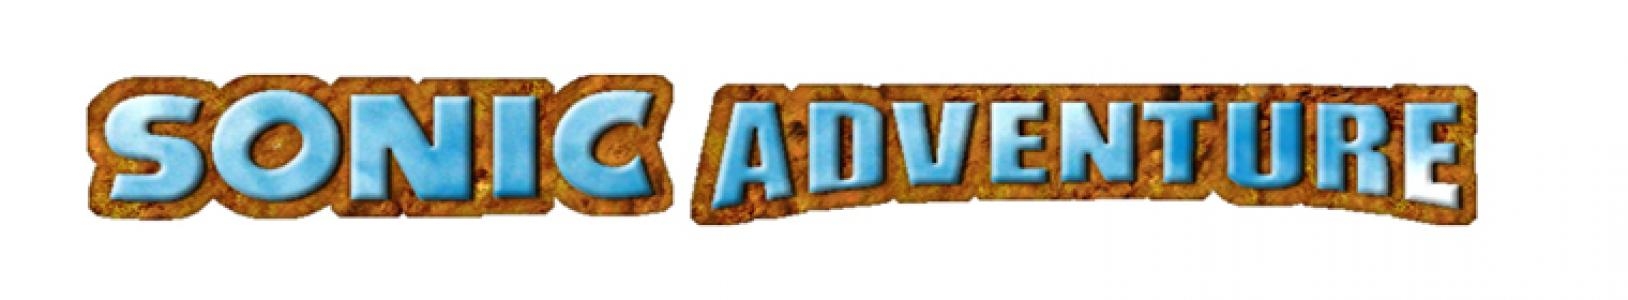 Sonic Adventure banner